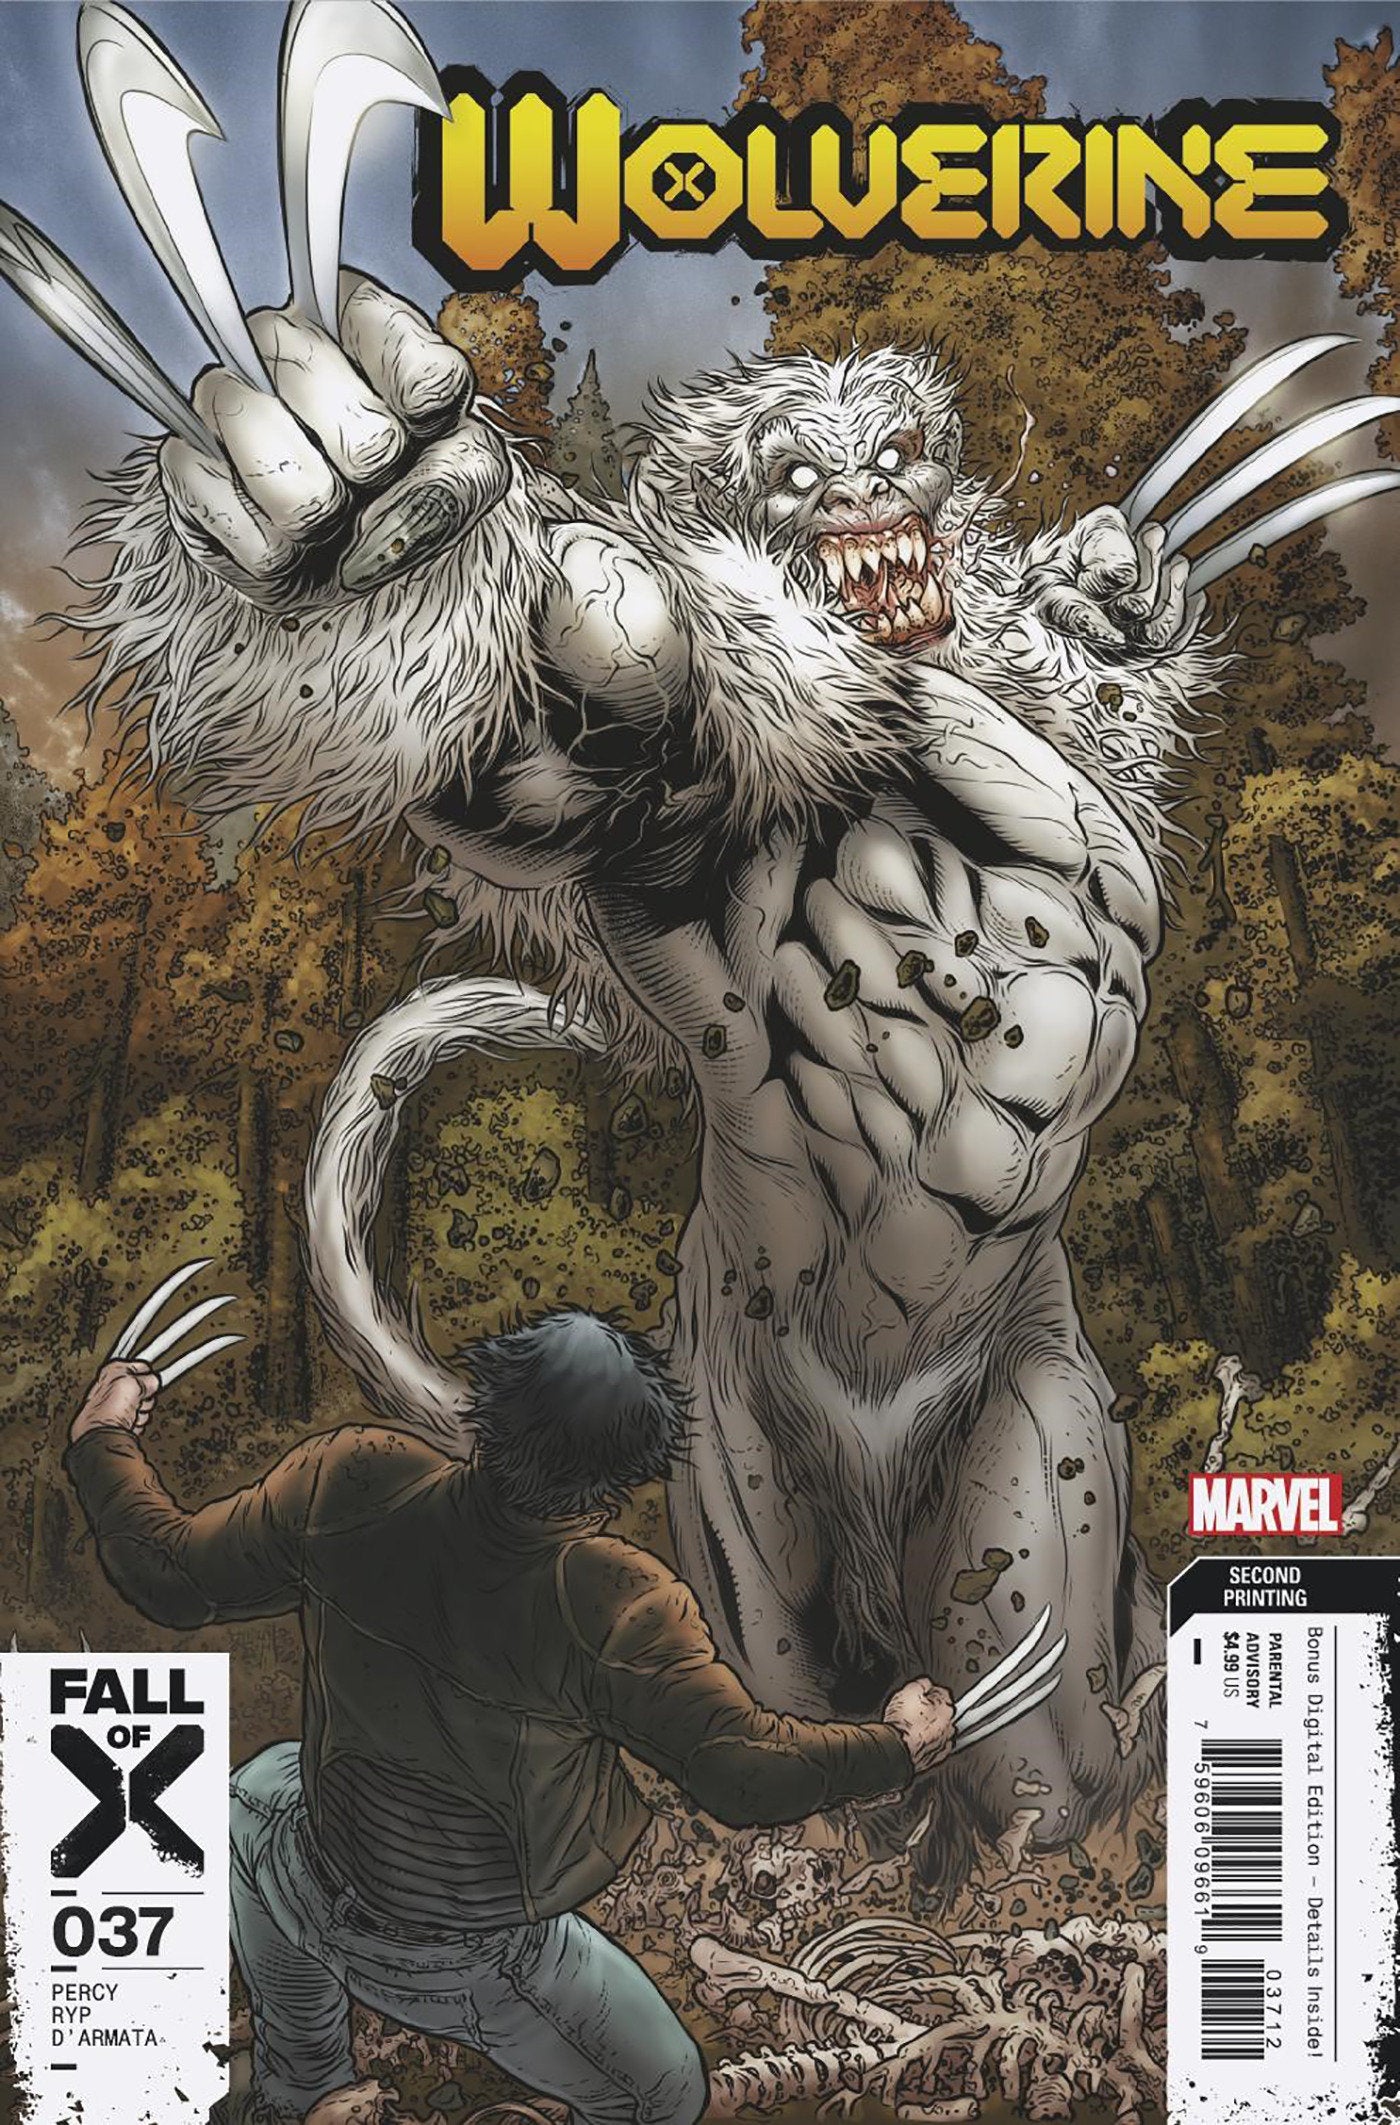 Wolverine #37 Juan Jose Ryp 2nd Print Variant [Fall]